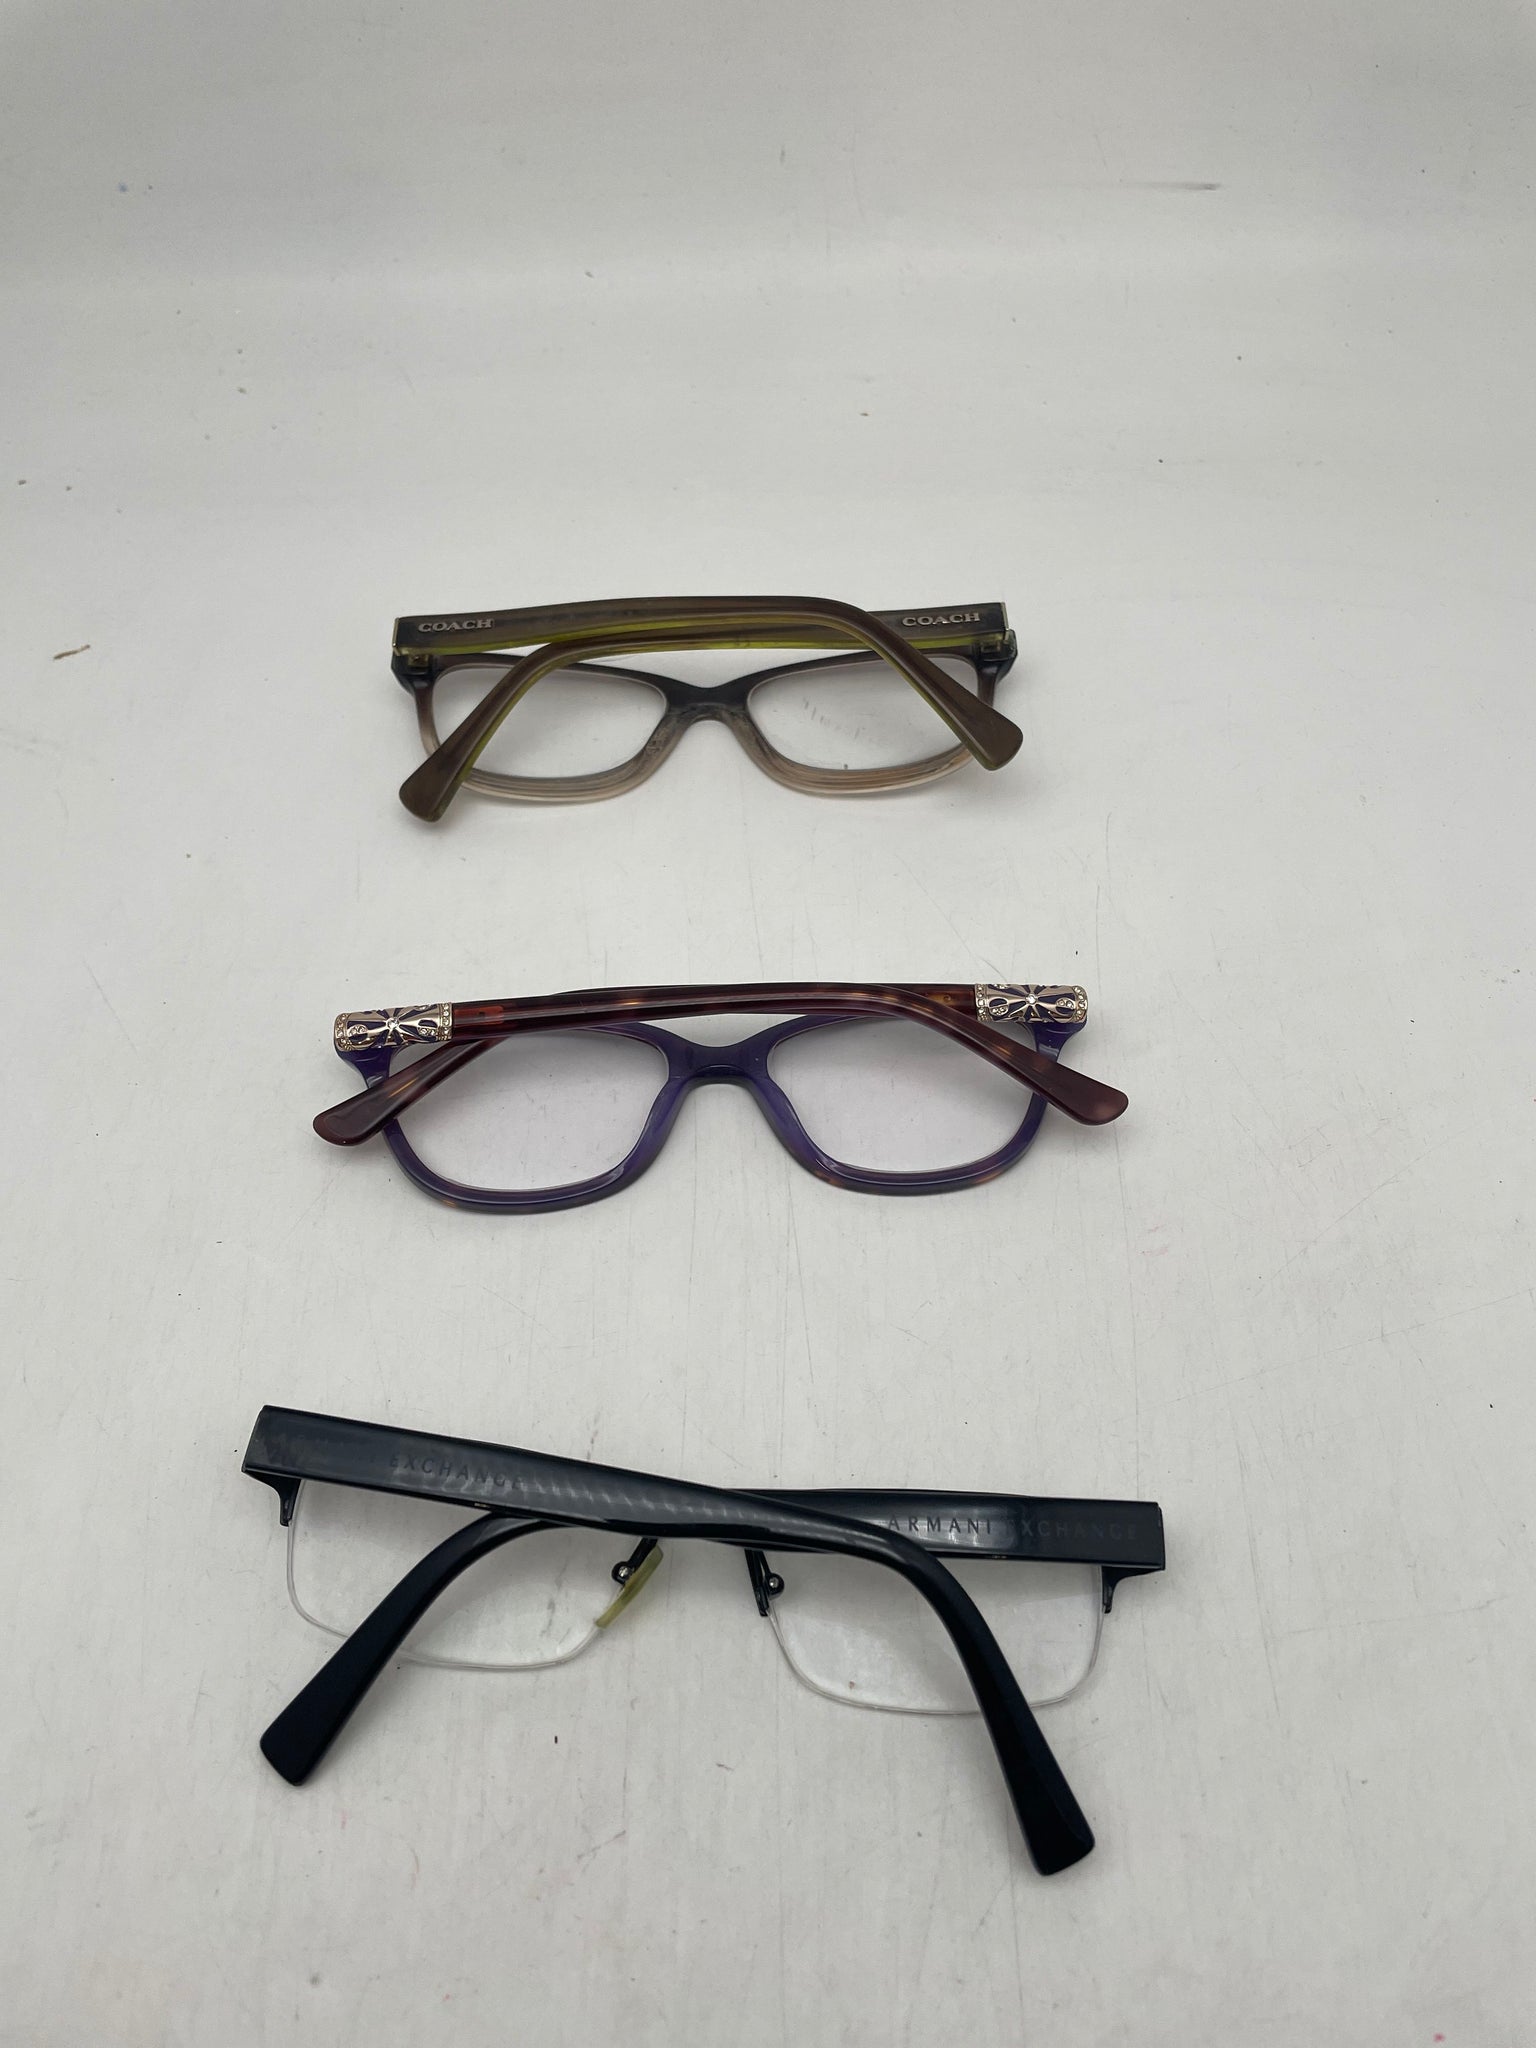 Coach, Dream Himax, Armani Exchange, Multicolored Glasses (3 PCS) – The ...